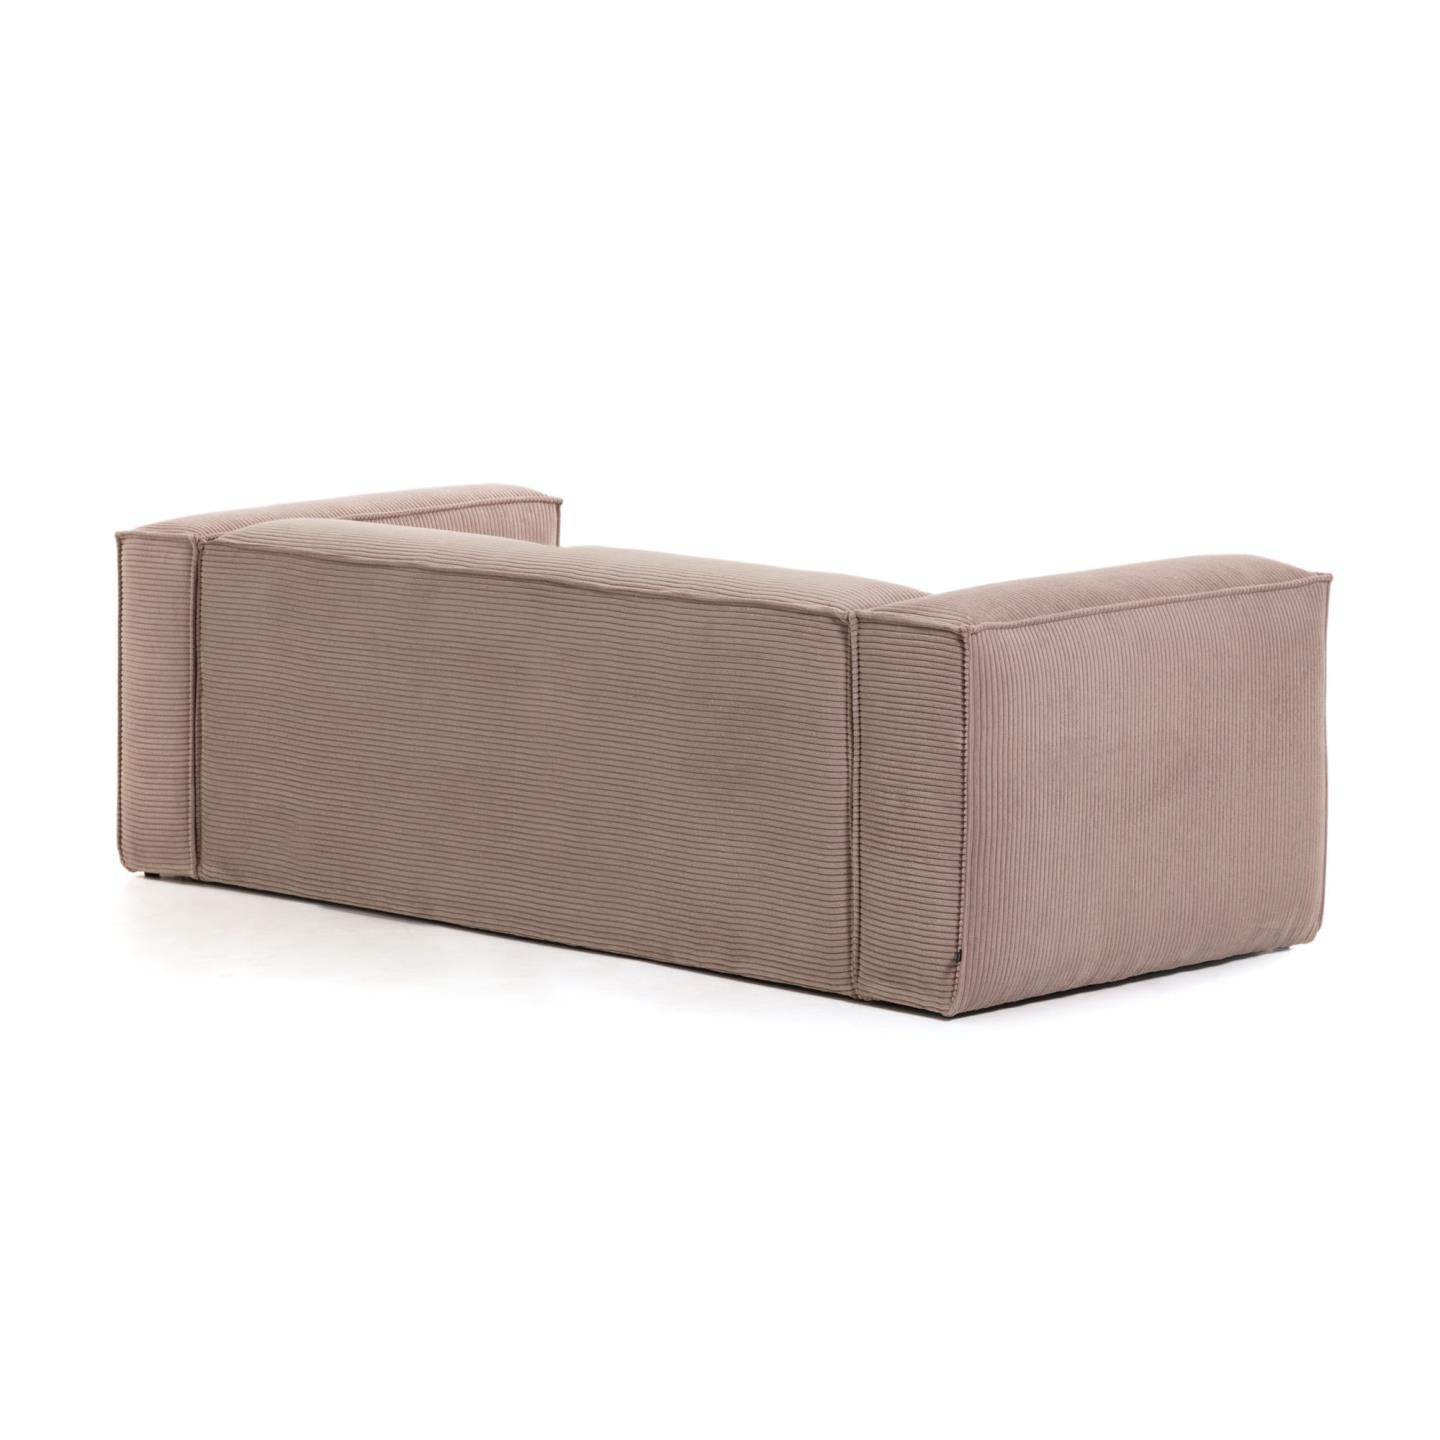 Blok 2 seater sofa in pink wide seam corduroy, 210 cm